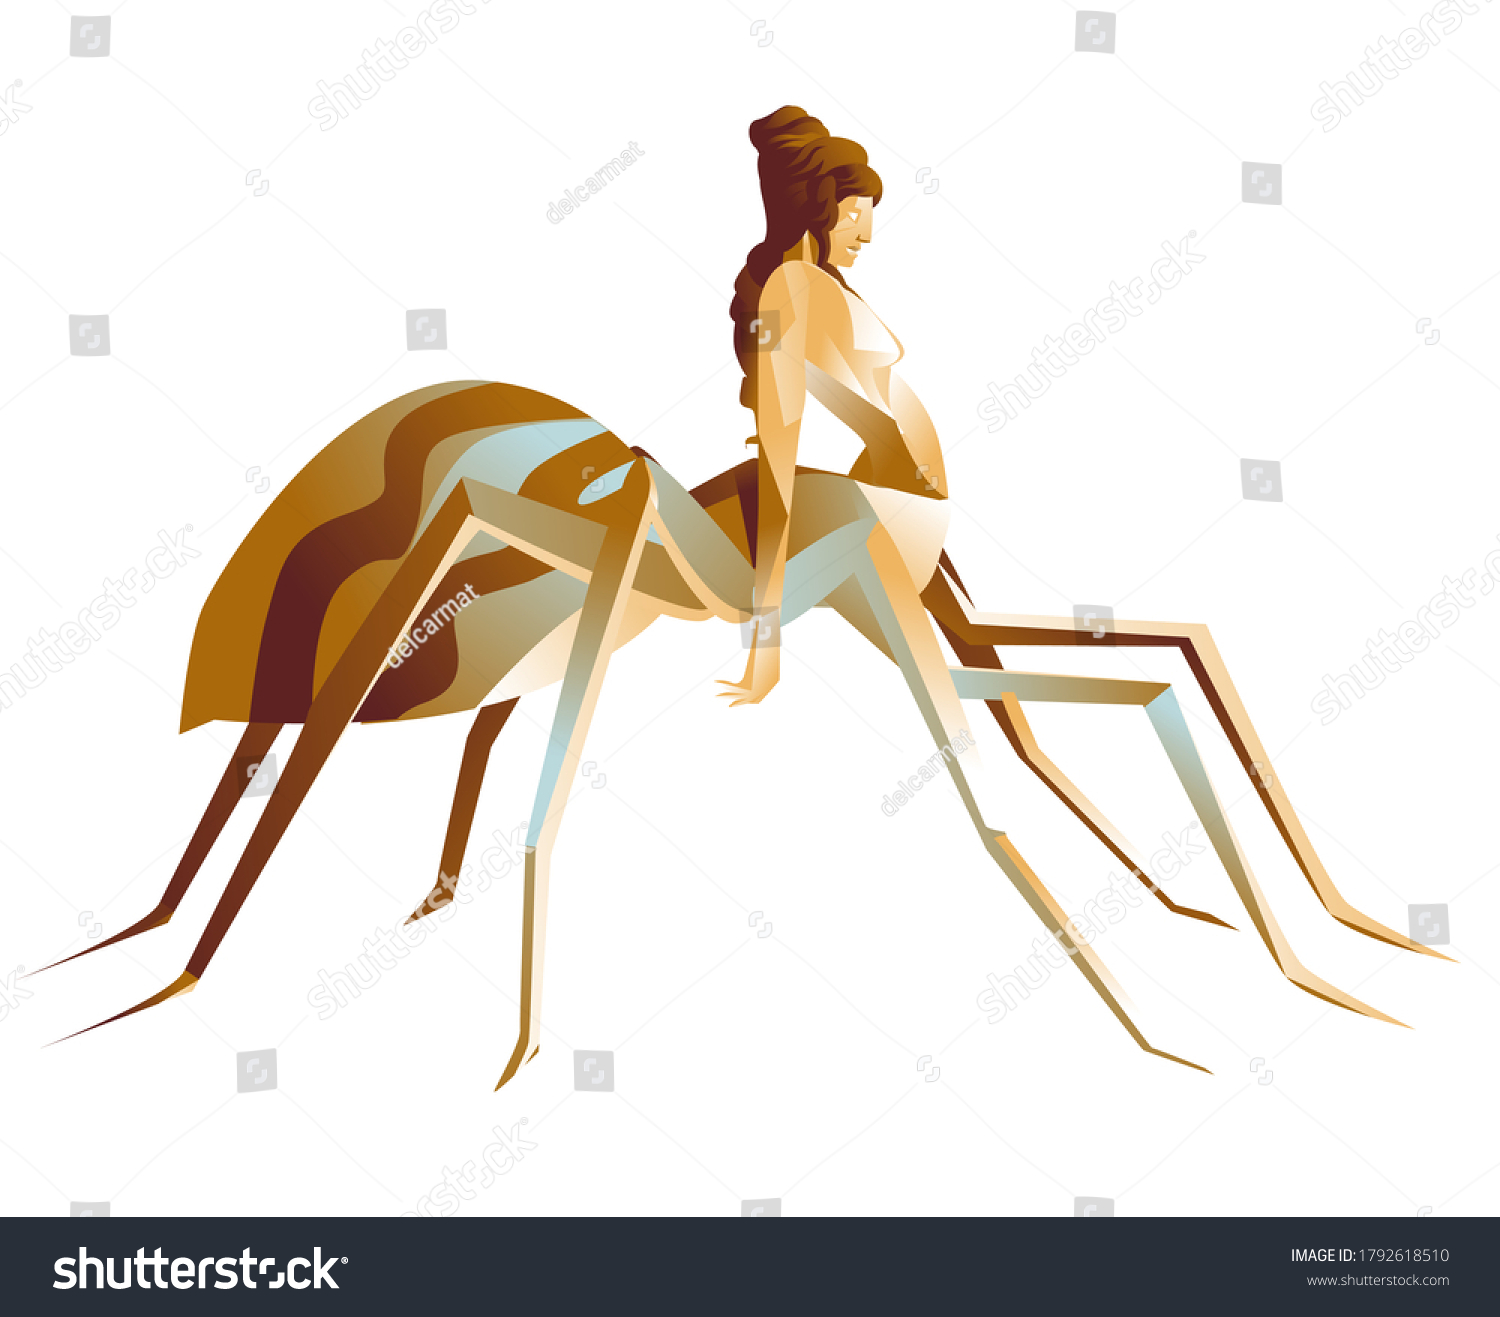 Arachne Greek Spider Mythology Woman Goddess เวกเตอร์สต็อก ปลอดค่าลิขสิทธิ์ 1792618510